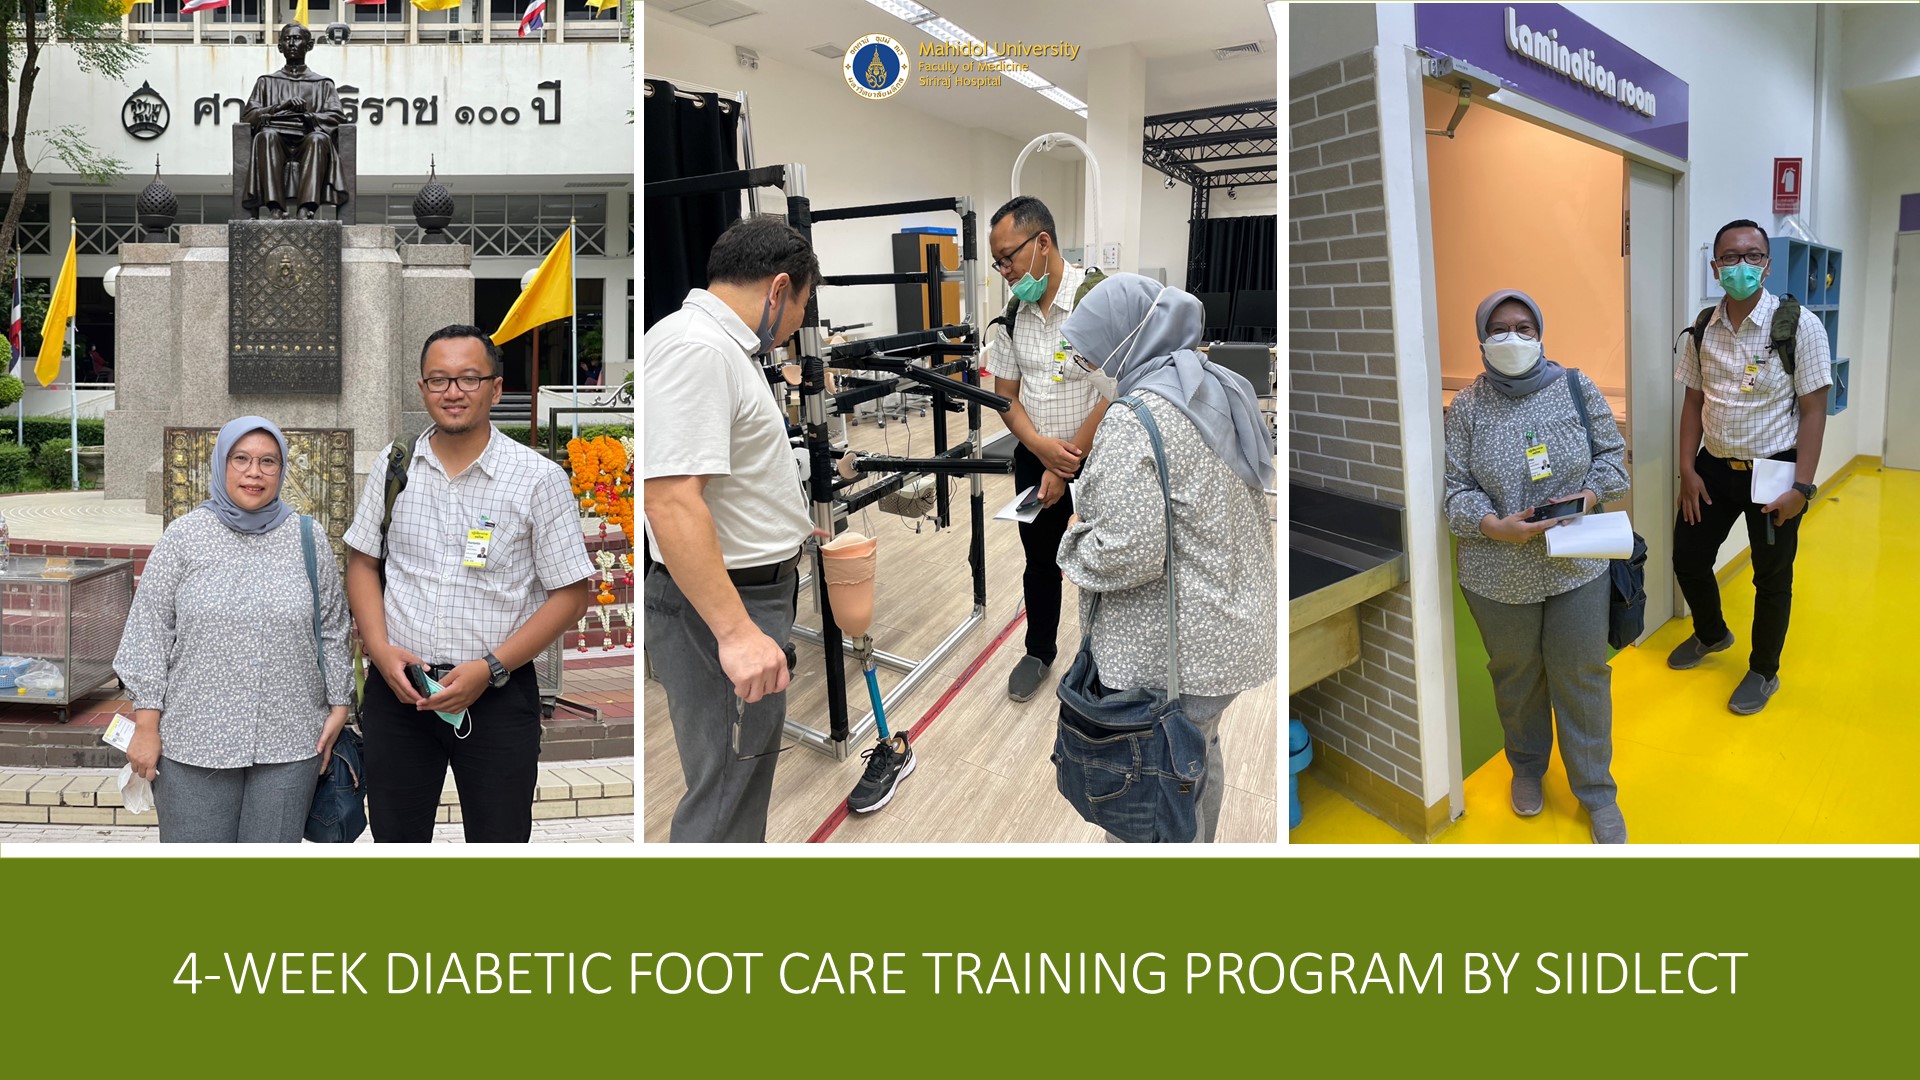 “4-Week Diabetic Foot Care Training Program by SiIDLECT” at Siriraj